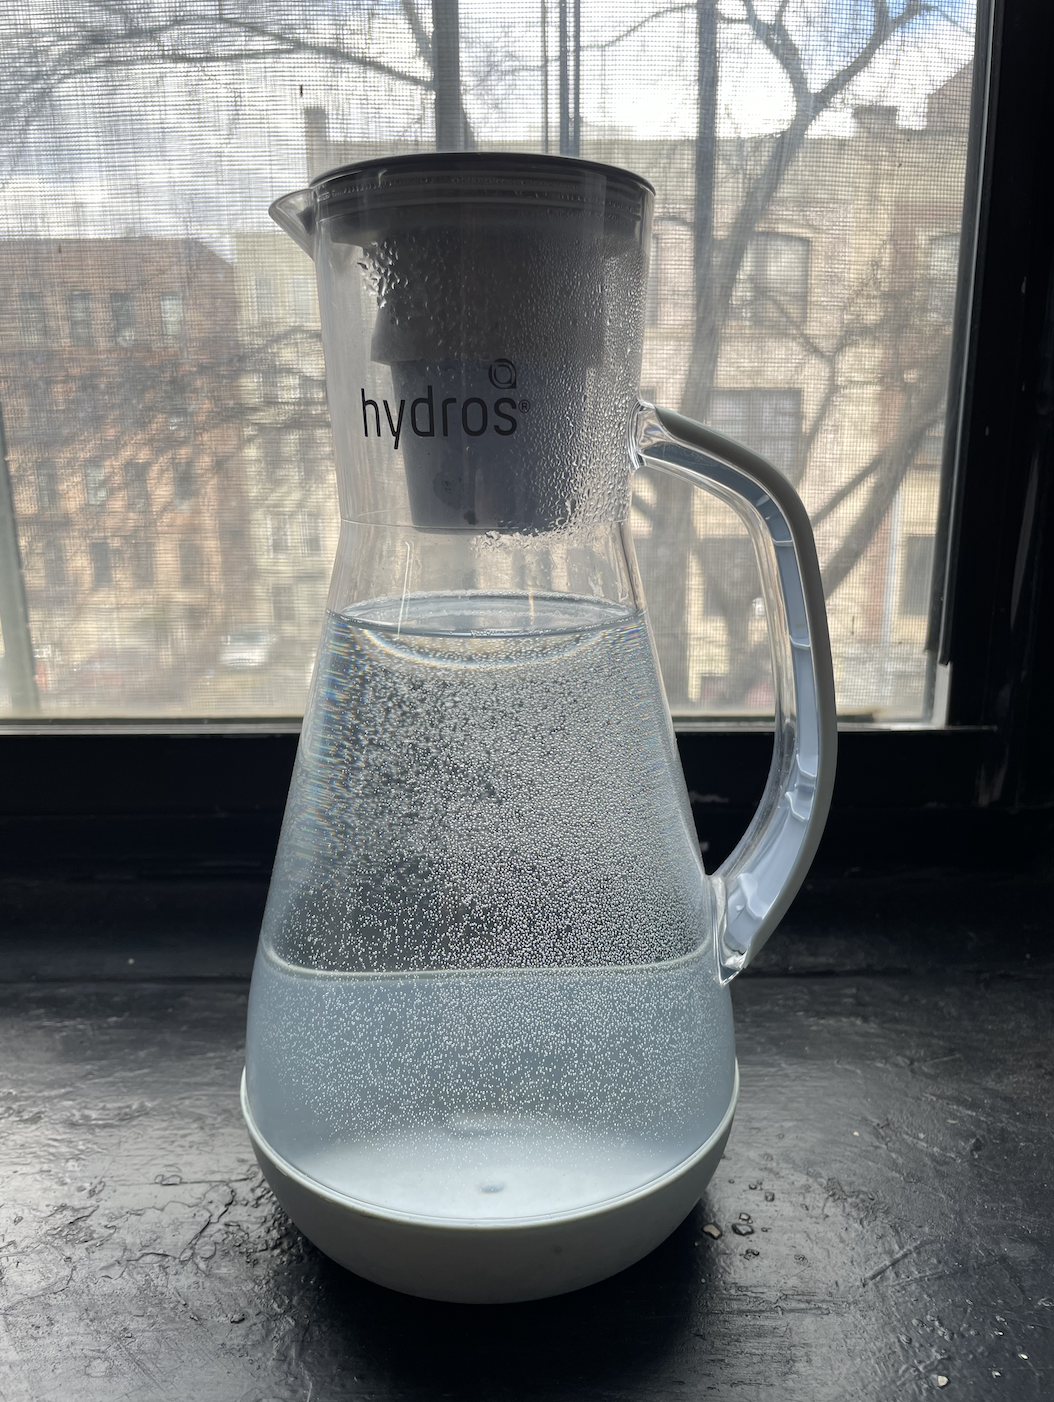 the hydros pitcher on a windowsill